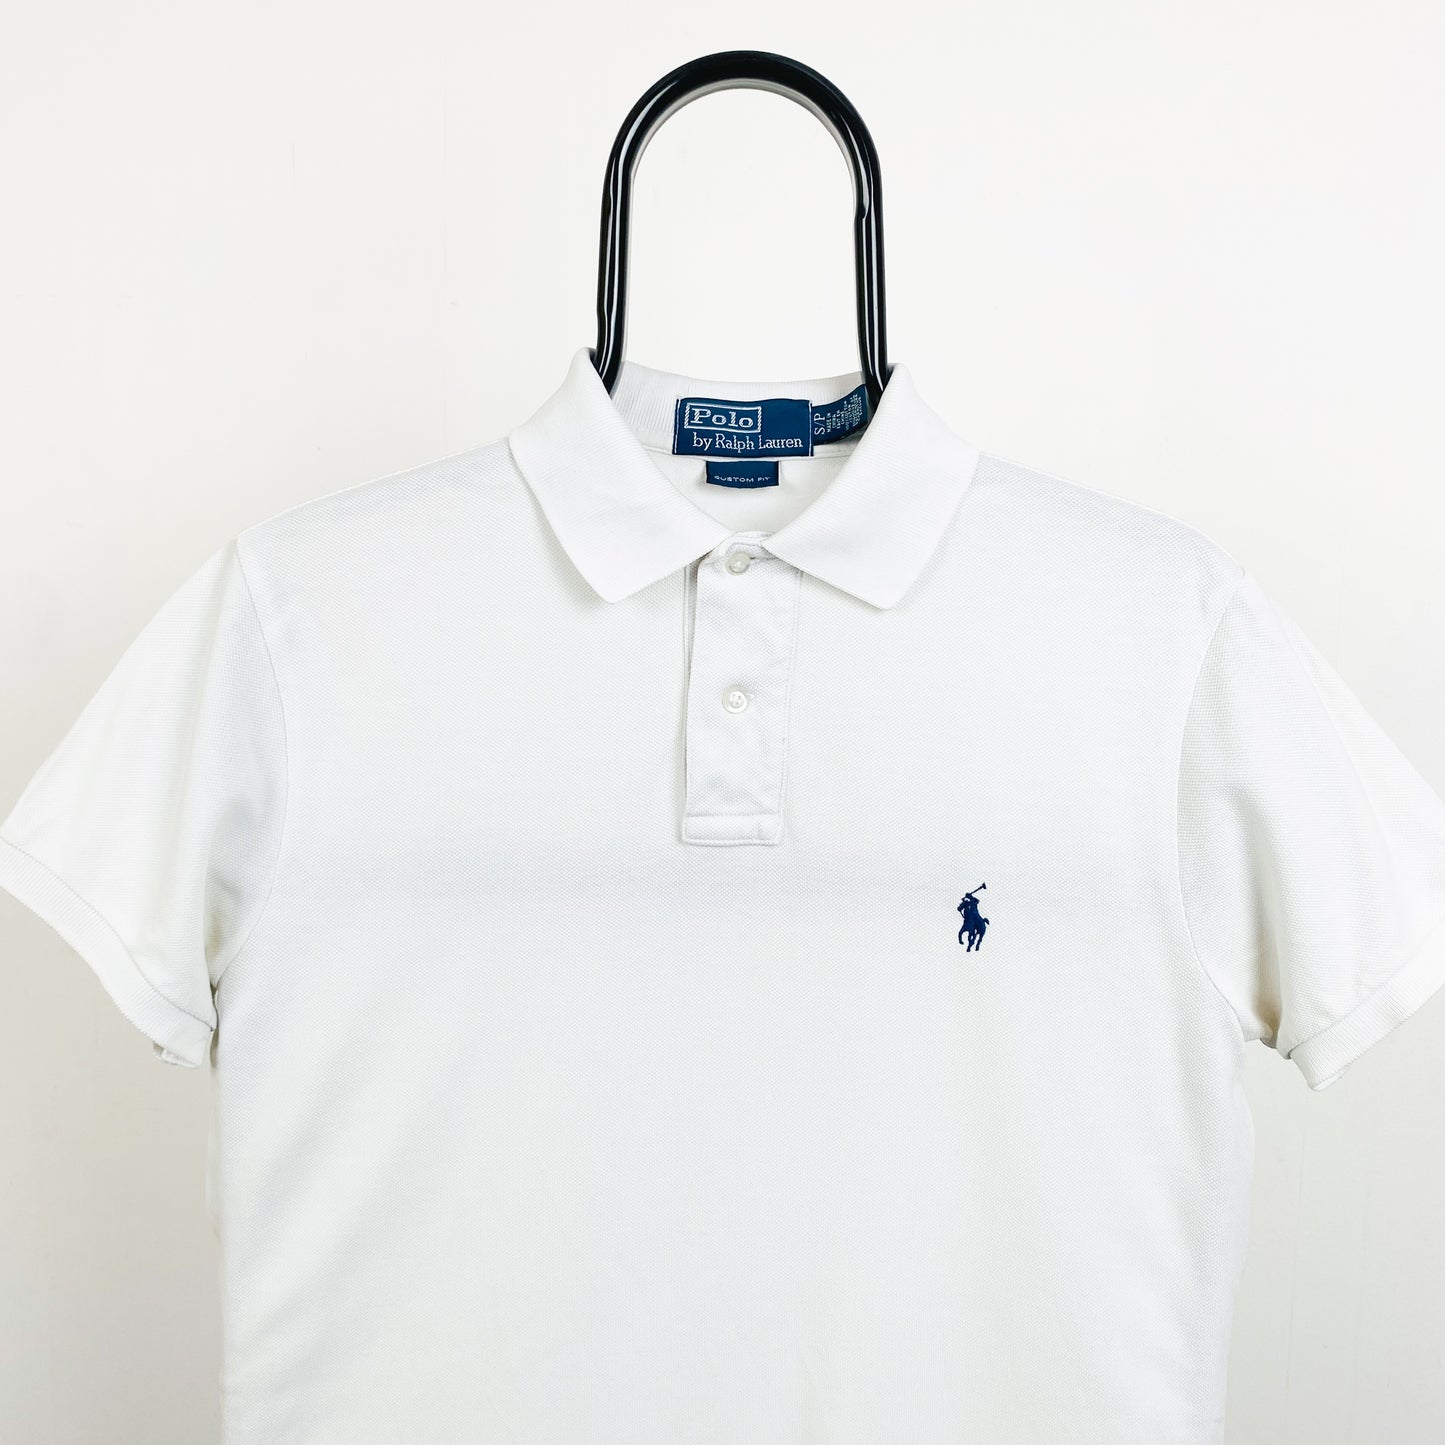 Retro Polo Ralph Lauren Polo Shirt T-Shirt White Small